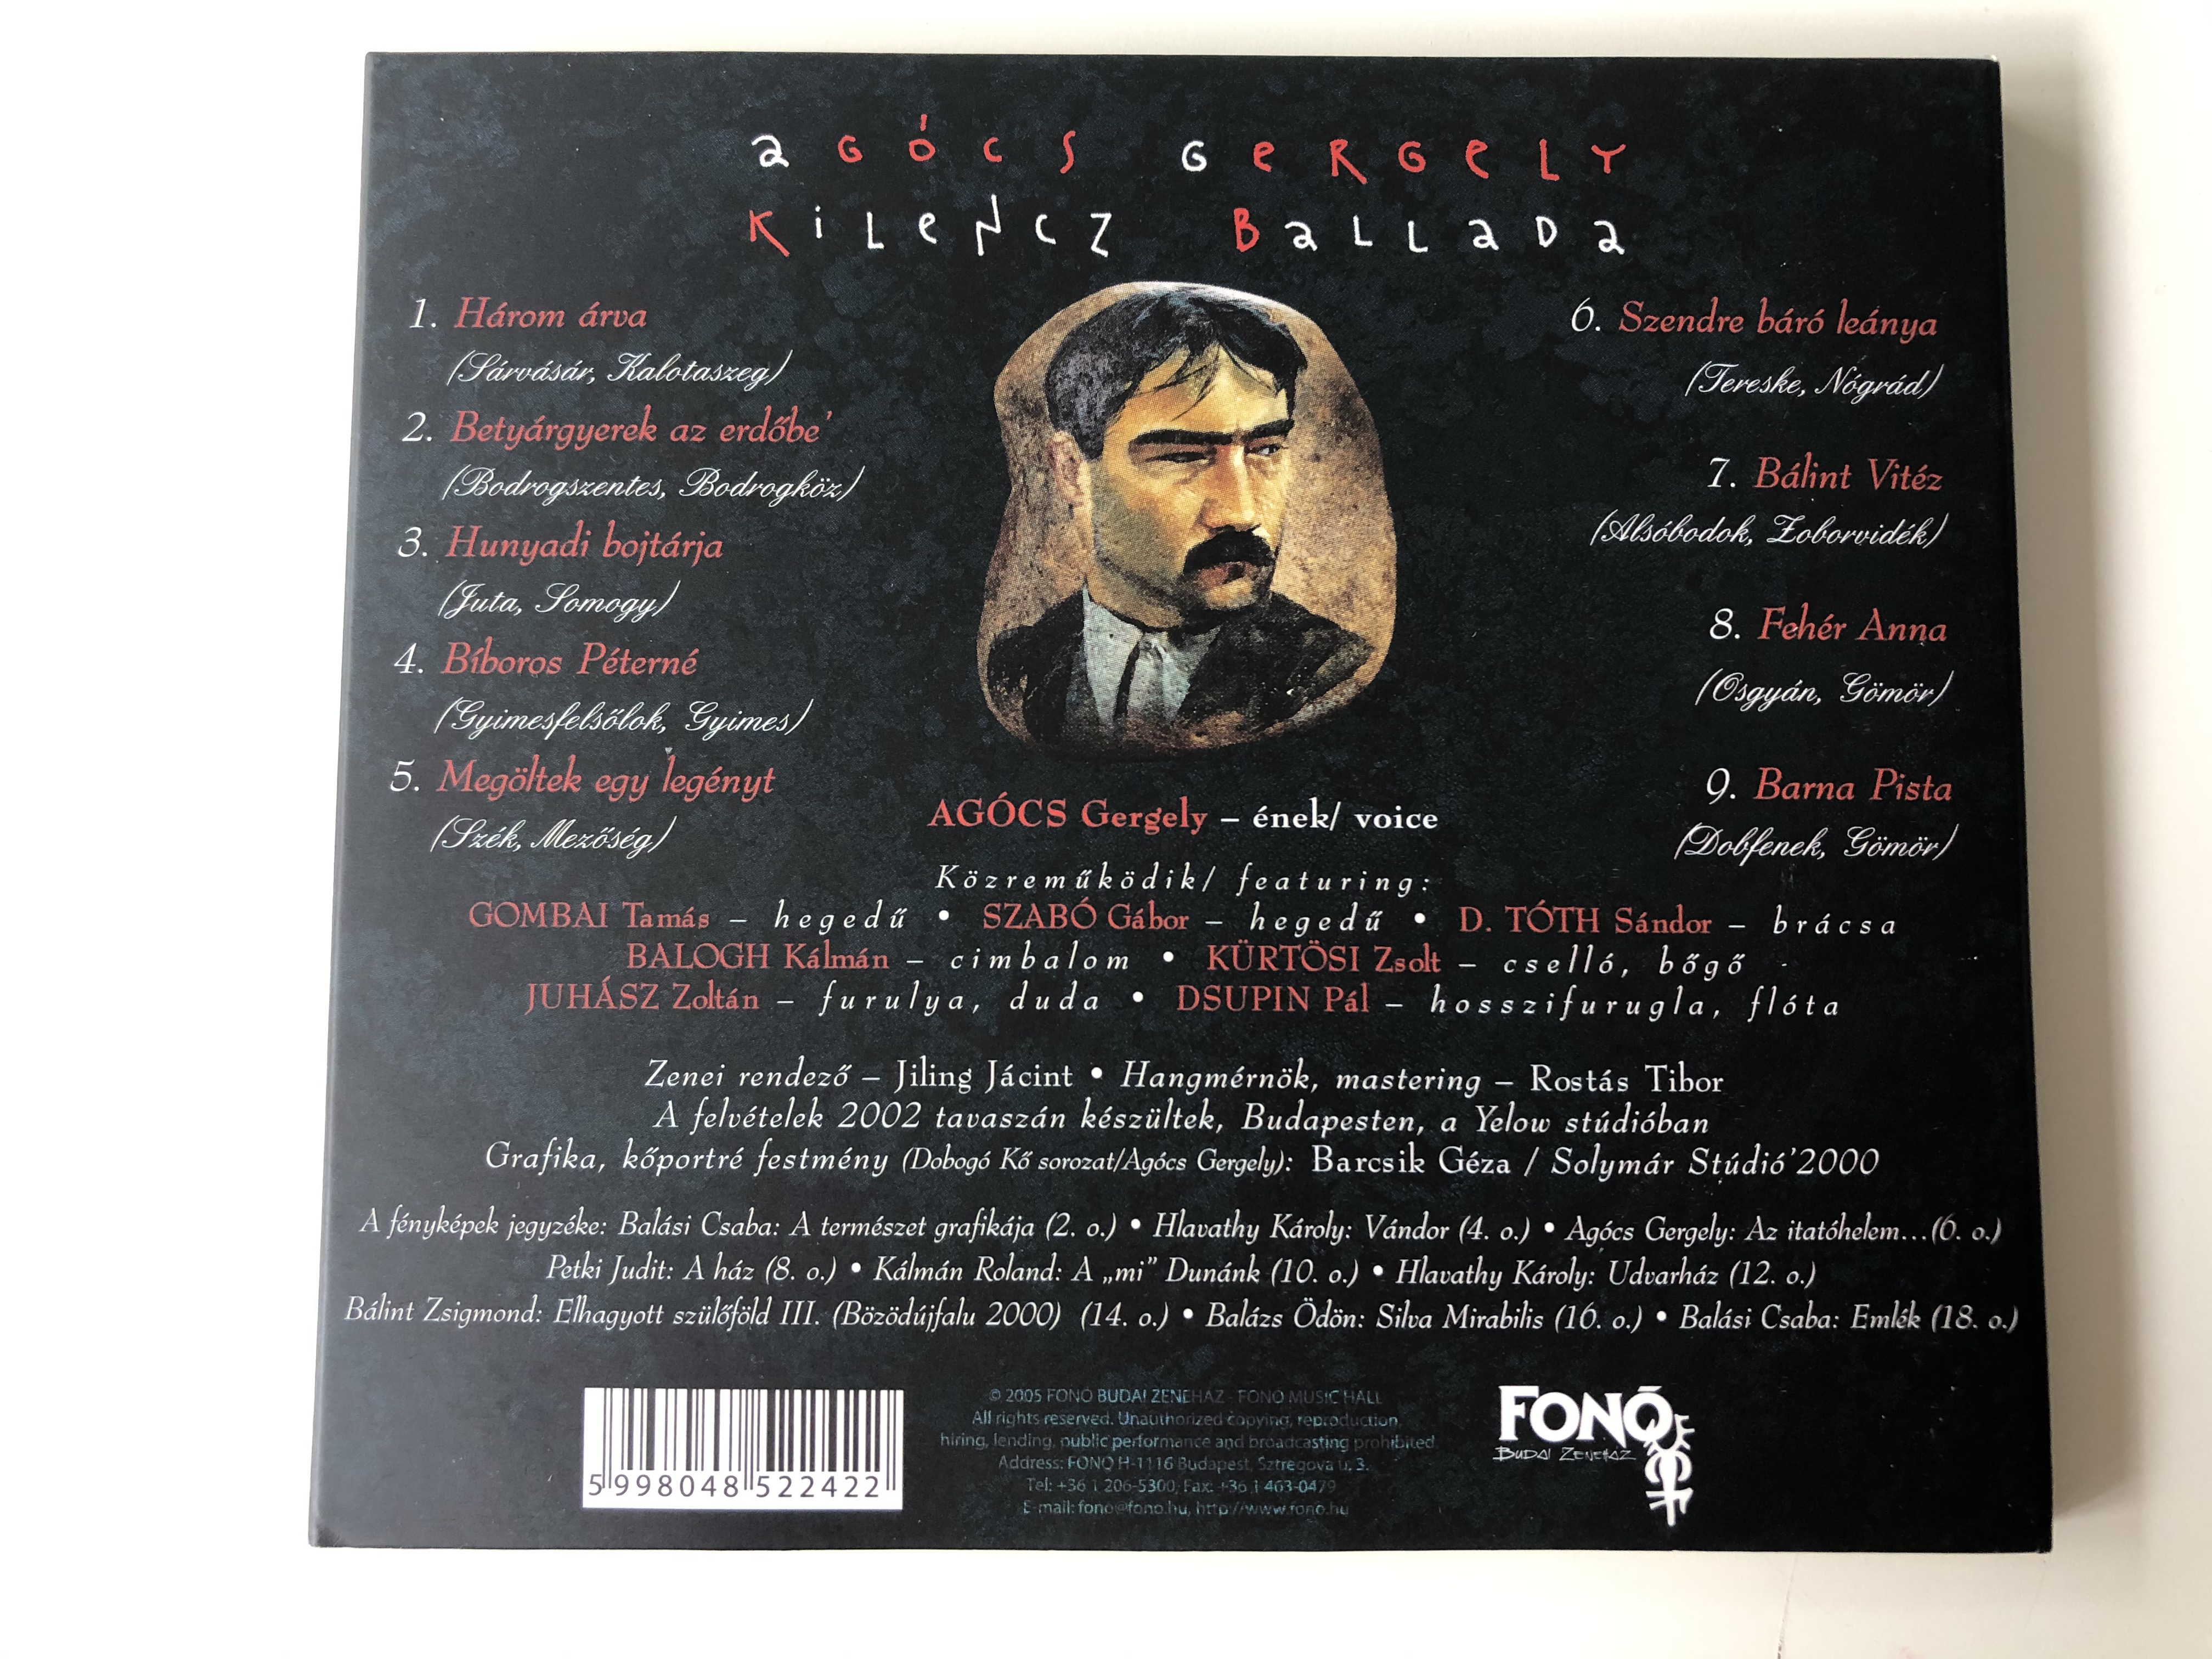 ag-cs-gergely-kilencz-ballada-fon-records-audio-cd-2005-fa224-2-17-.jpg